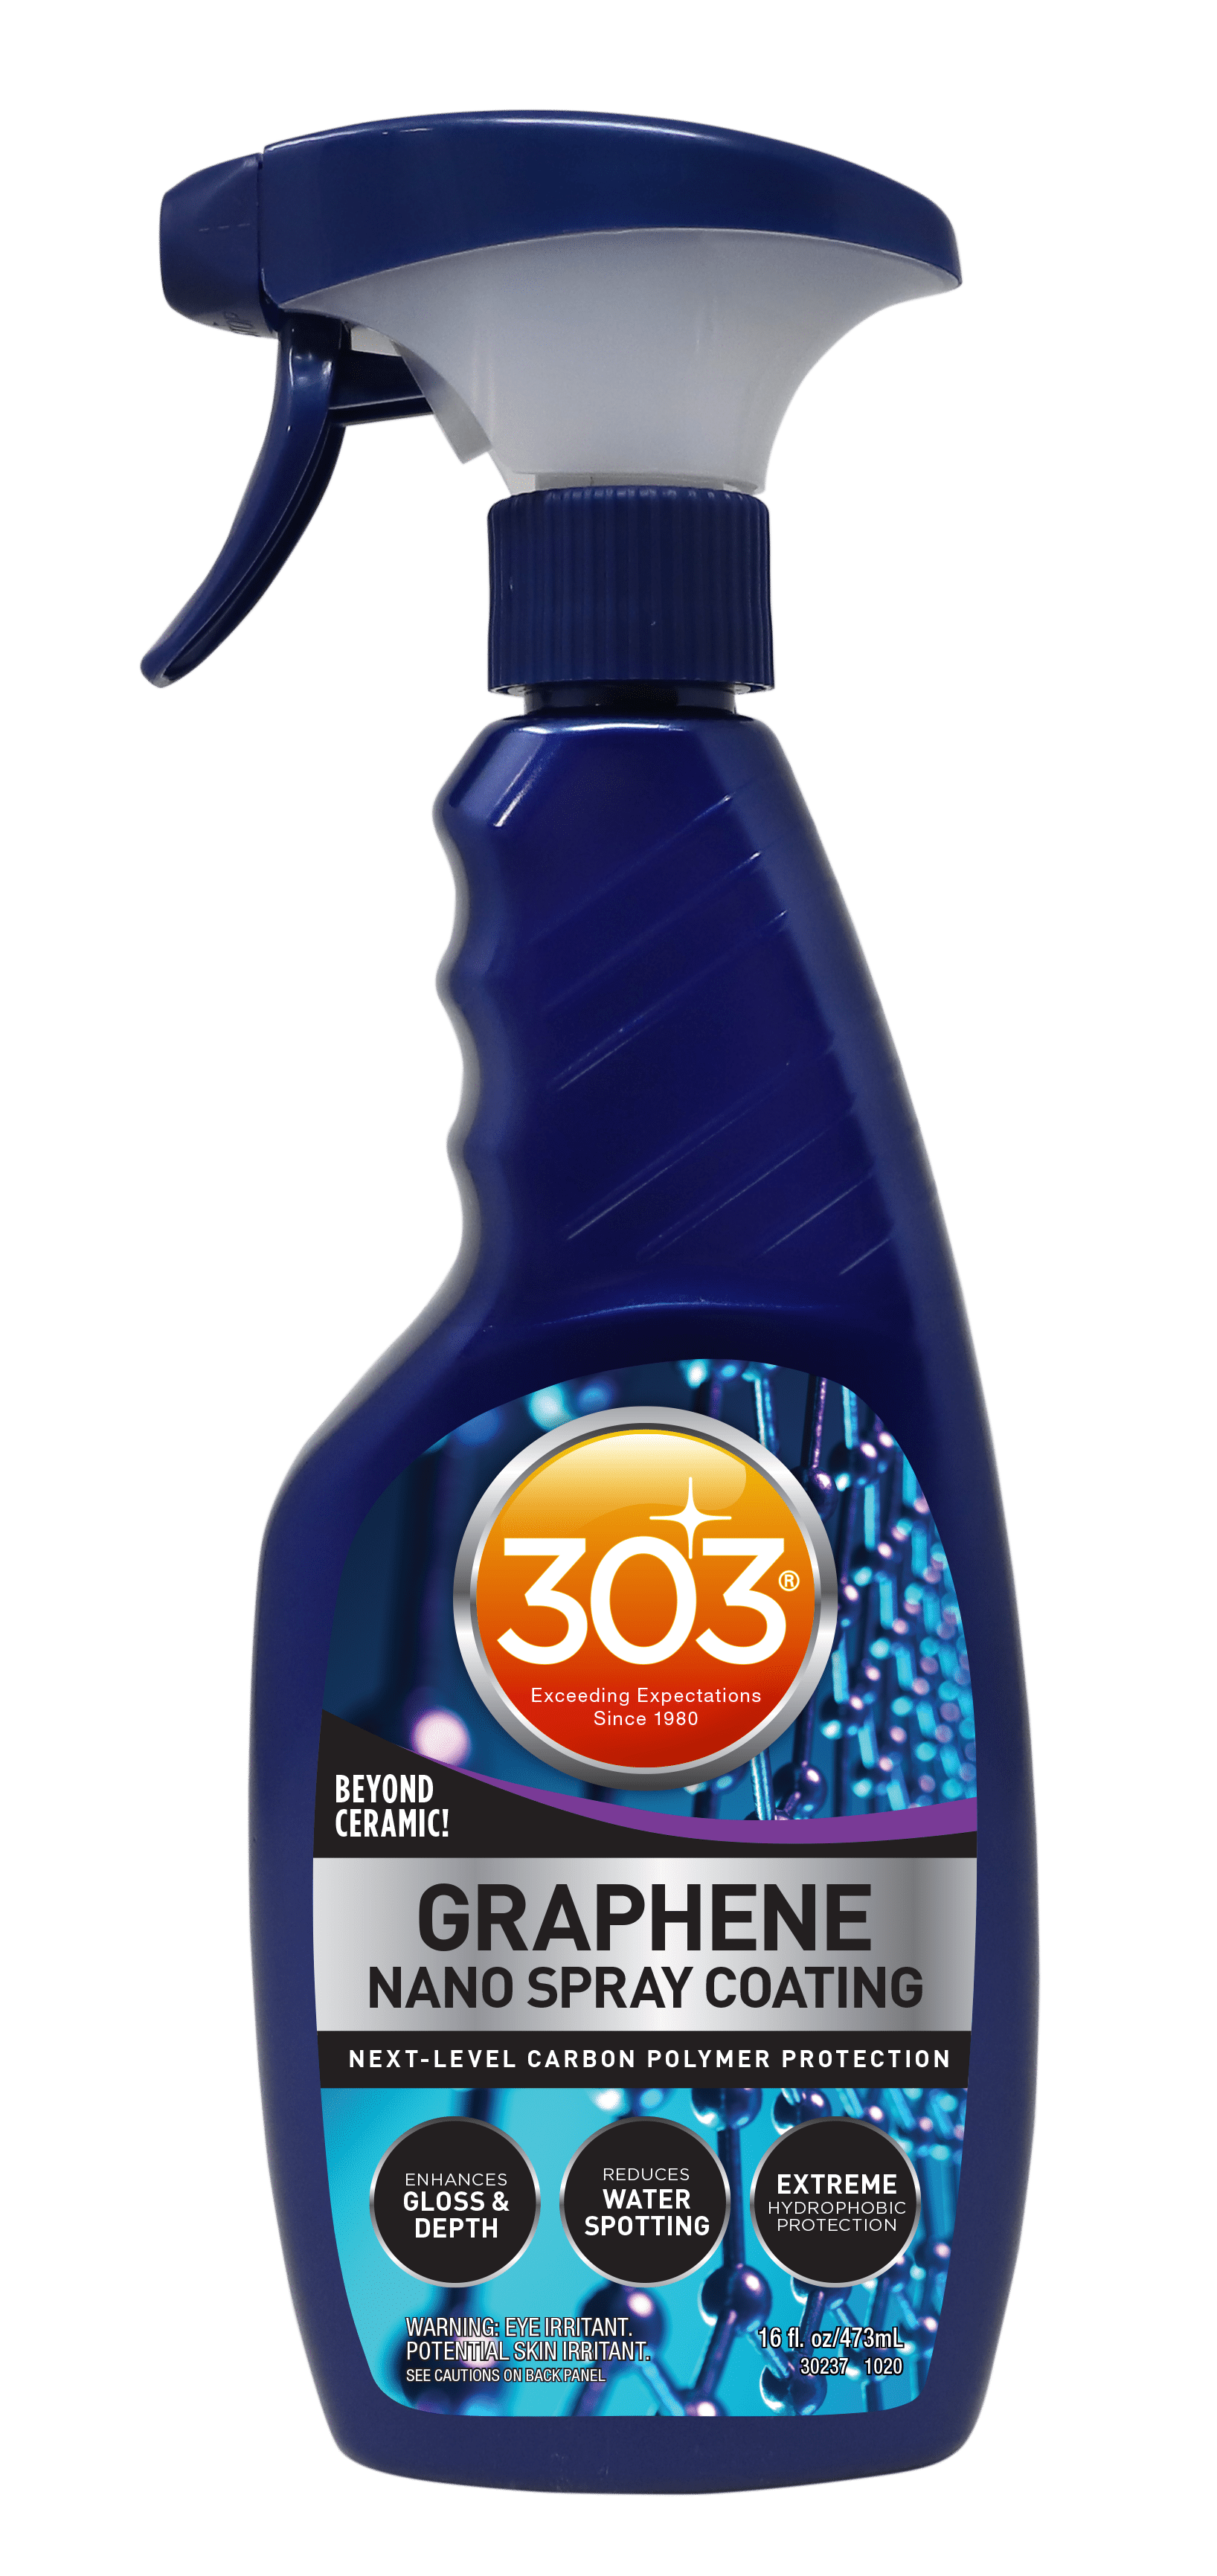 mode bevestig alstublieft Editie 303 Graphene Nano Spray Coating - Next Level Carbon Polymer Protection,  Enhances Gloss and Depth, Extreme Hydrophobic Protection, Beyond Ceramic,  15.5oz (30236CSR) Packaging May Vary - Walmart.com